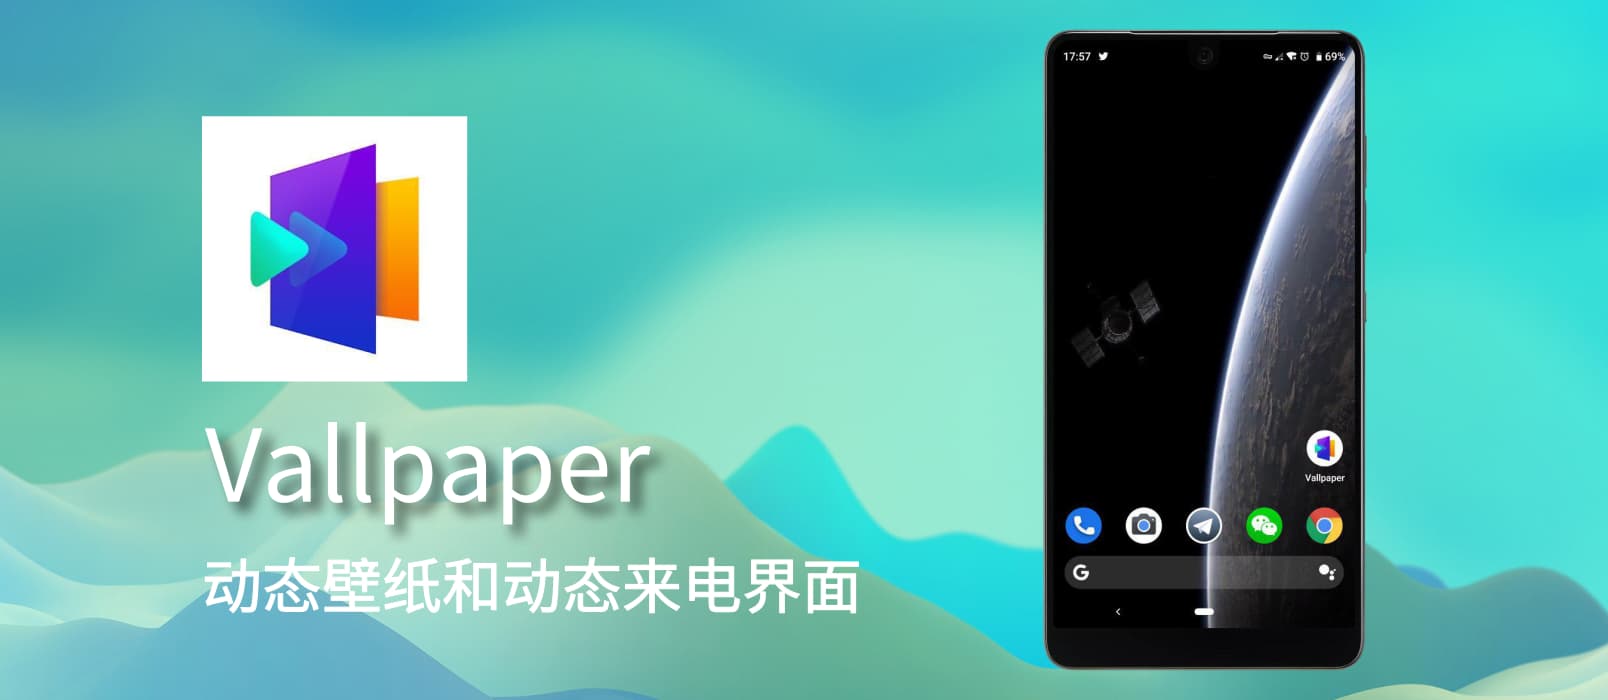 Vallpaper - 动态视频壁纸与动态来电秀界面 [Android] 1